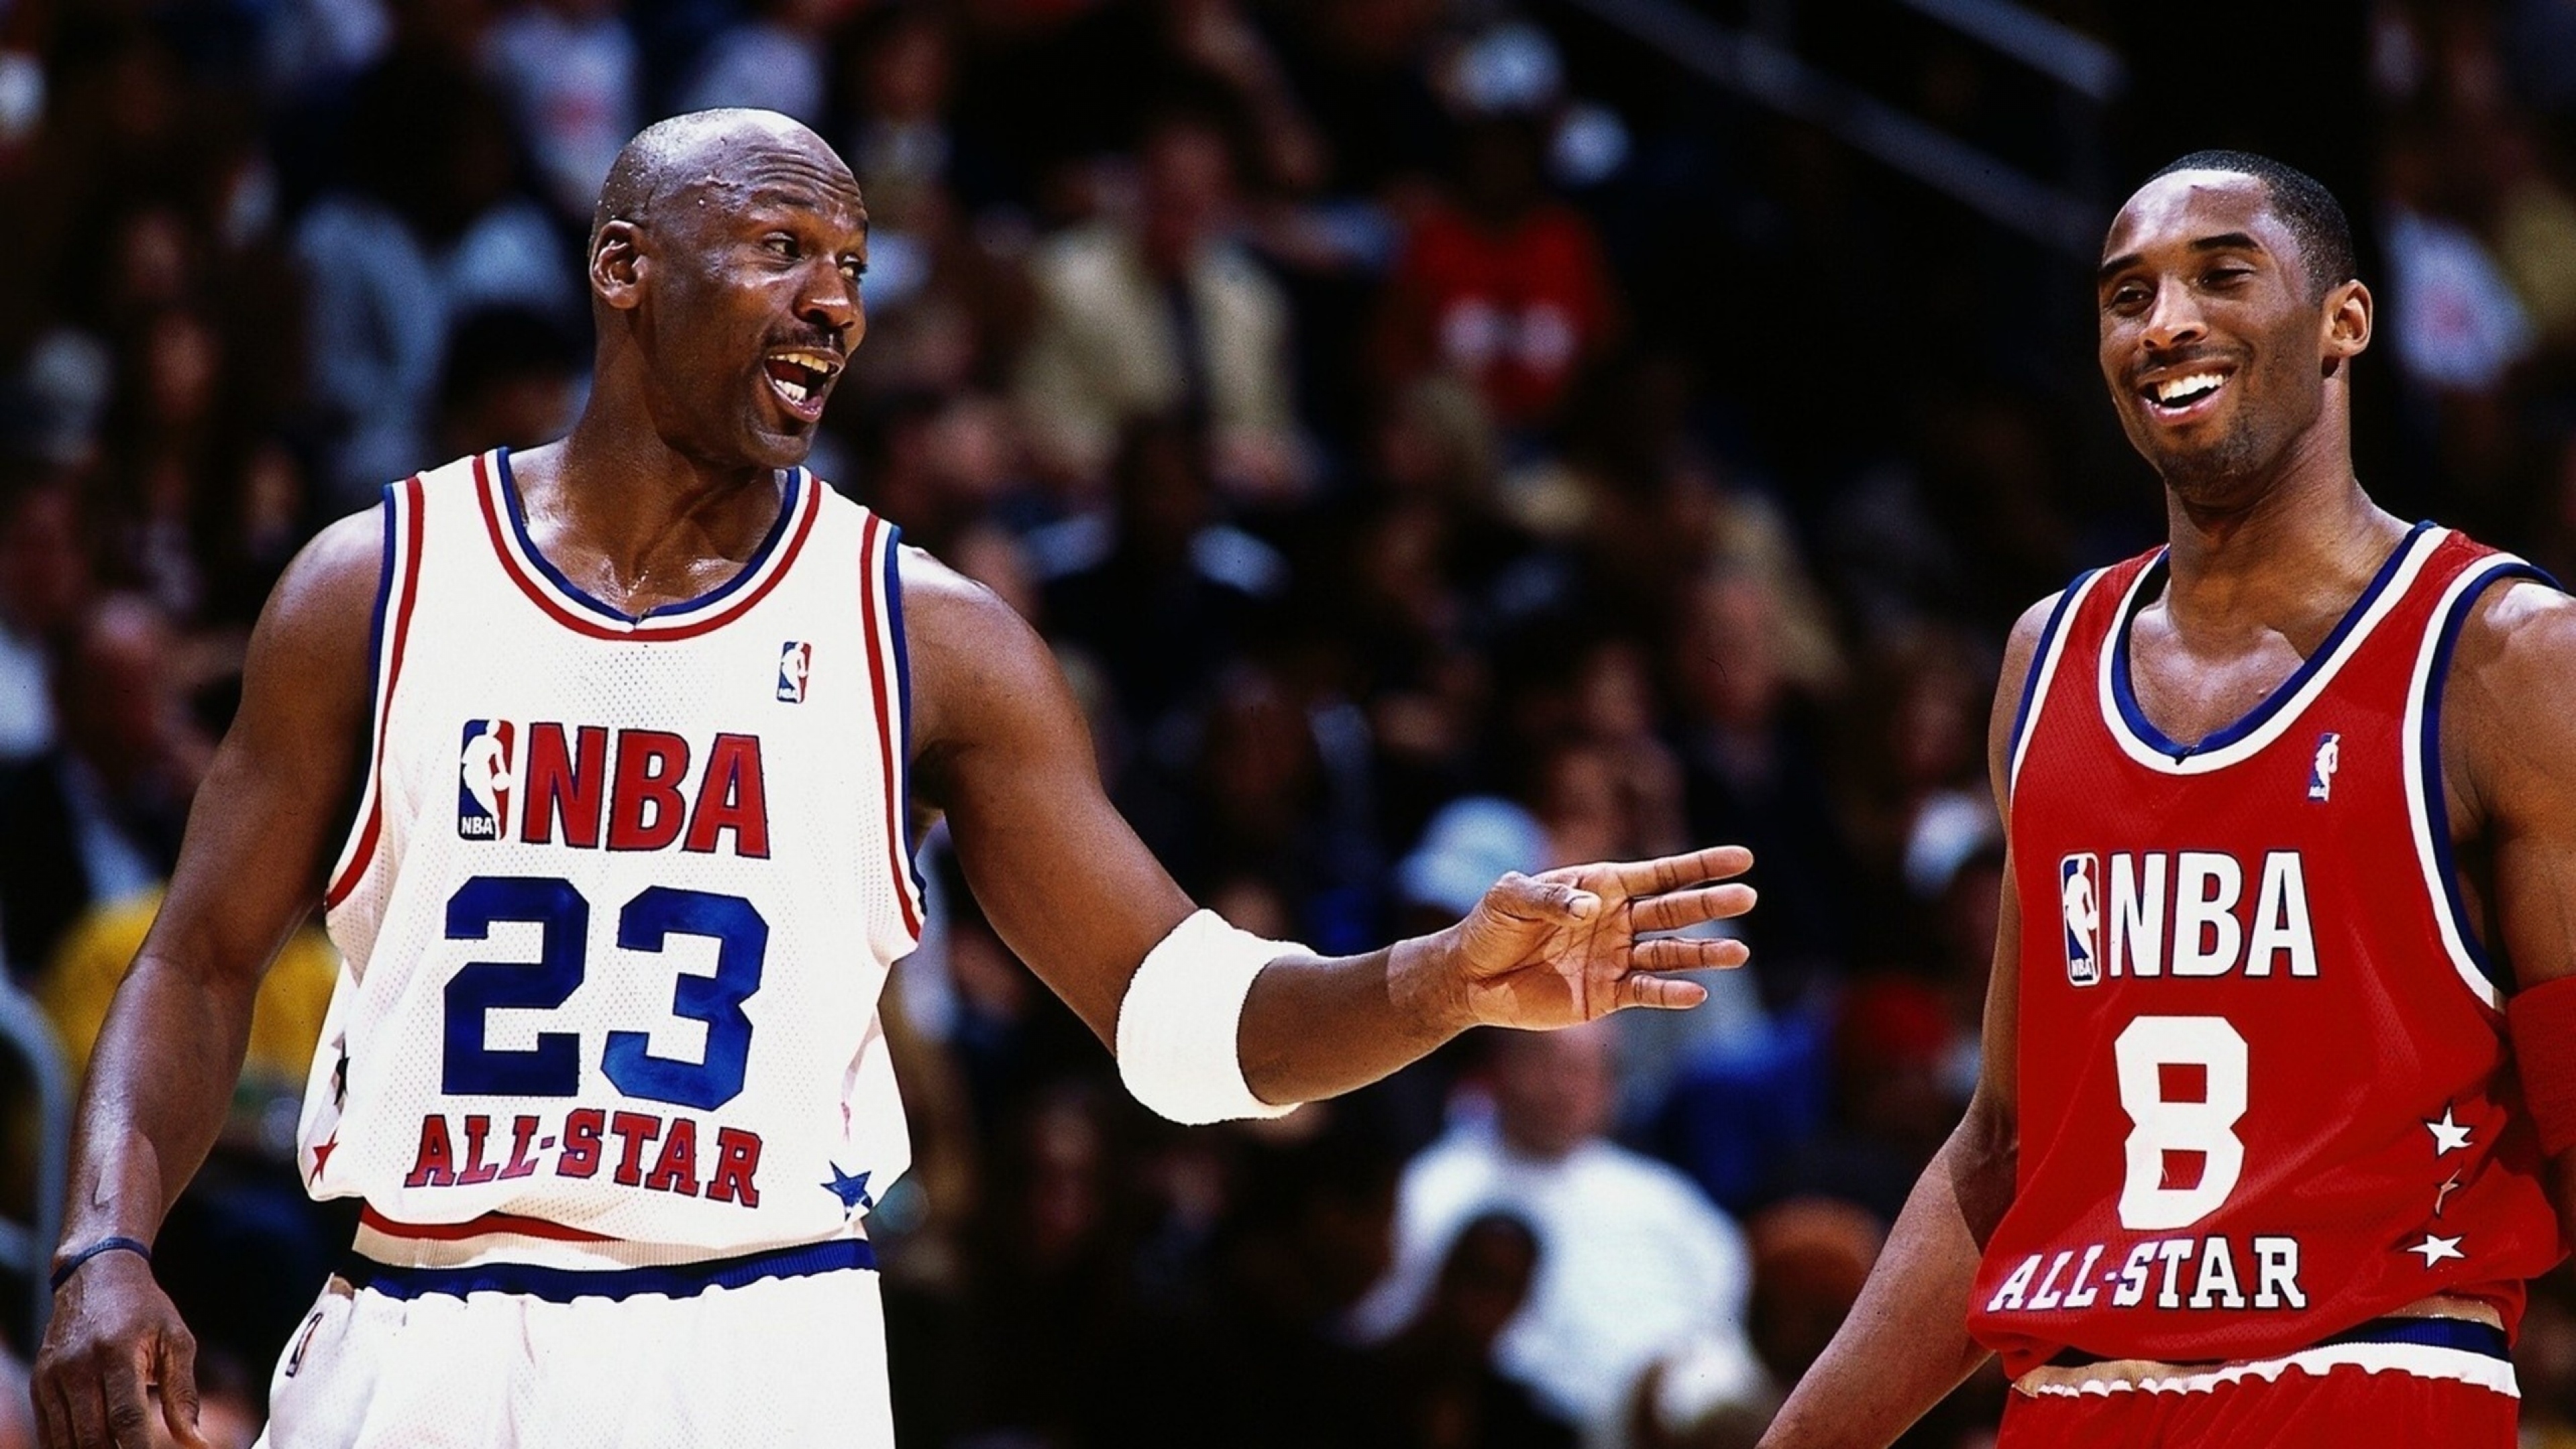 Bryant Michael Jordan Basketball Wallpaper Background 4k Ultra HD